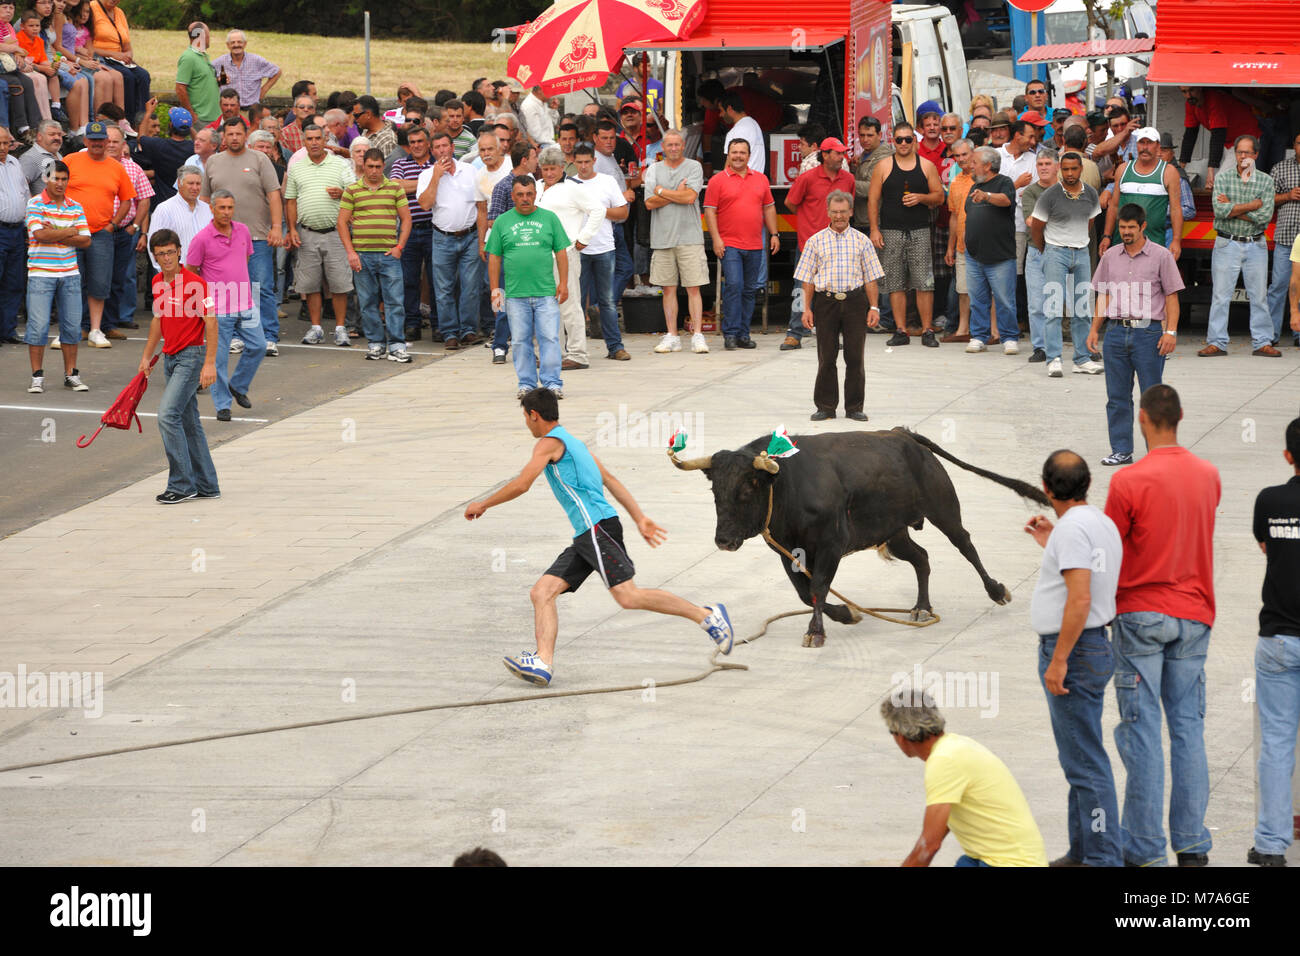 Bullfight (Tourada à Corda) in Porto Martins. Terceira island, Azores. Portugal Stock Photo